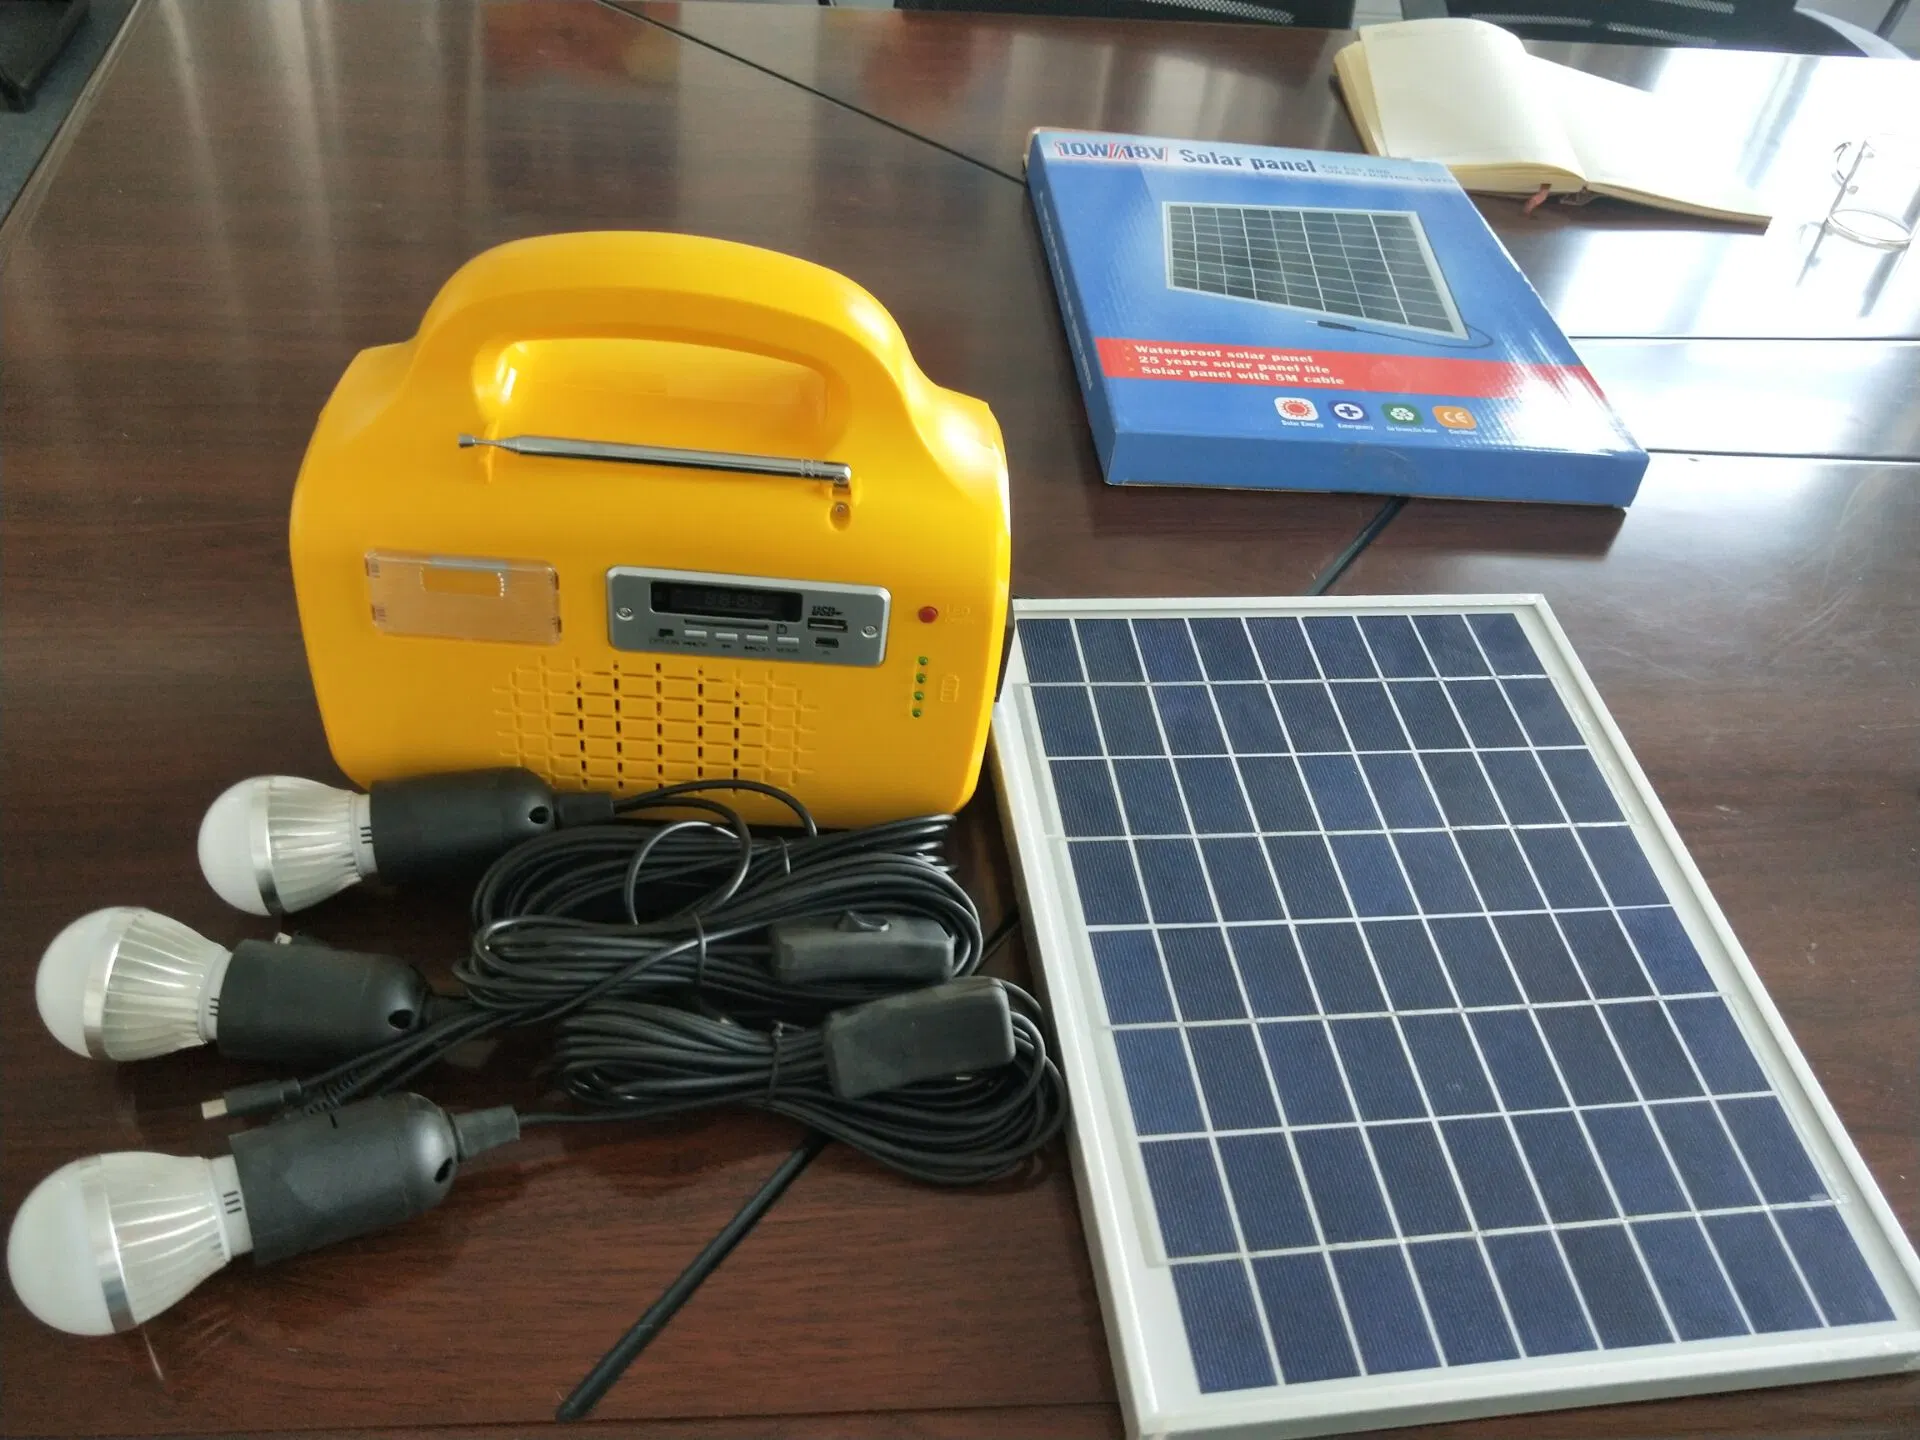 Solar PV Panel FM Radio+MP3 Solar Power Kits Portable Lighitng System 10W Sf-1210p for Home Lighting